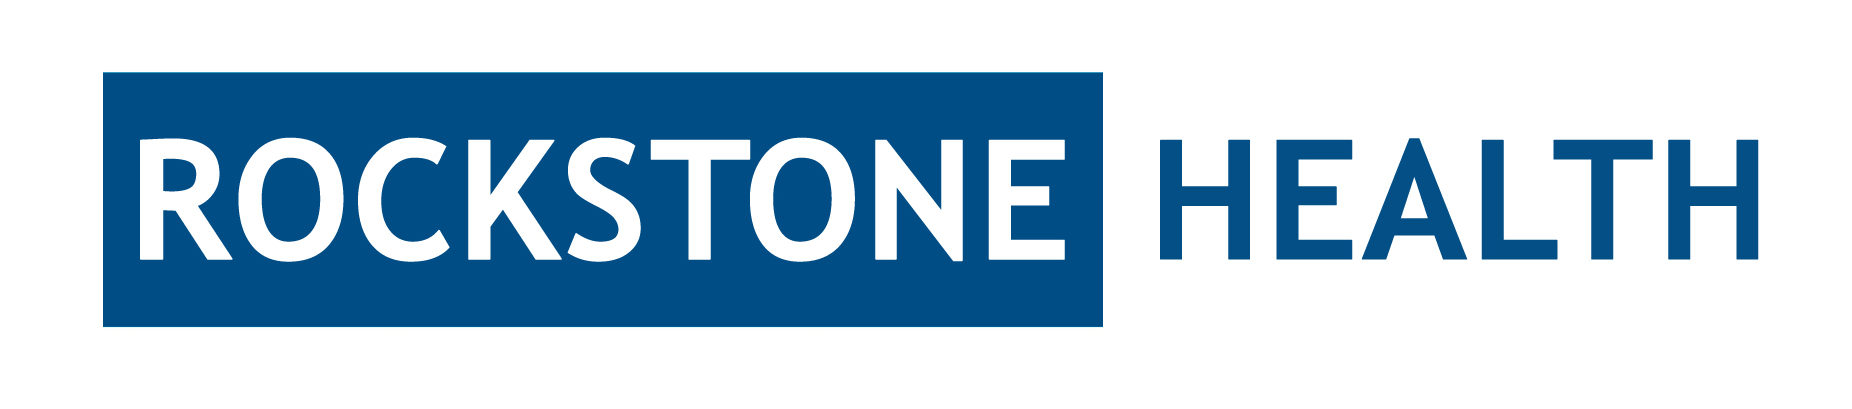 Rockstone Health Logo New